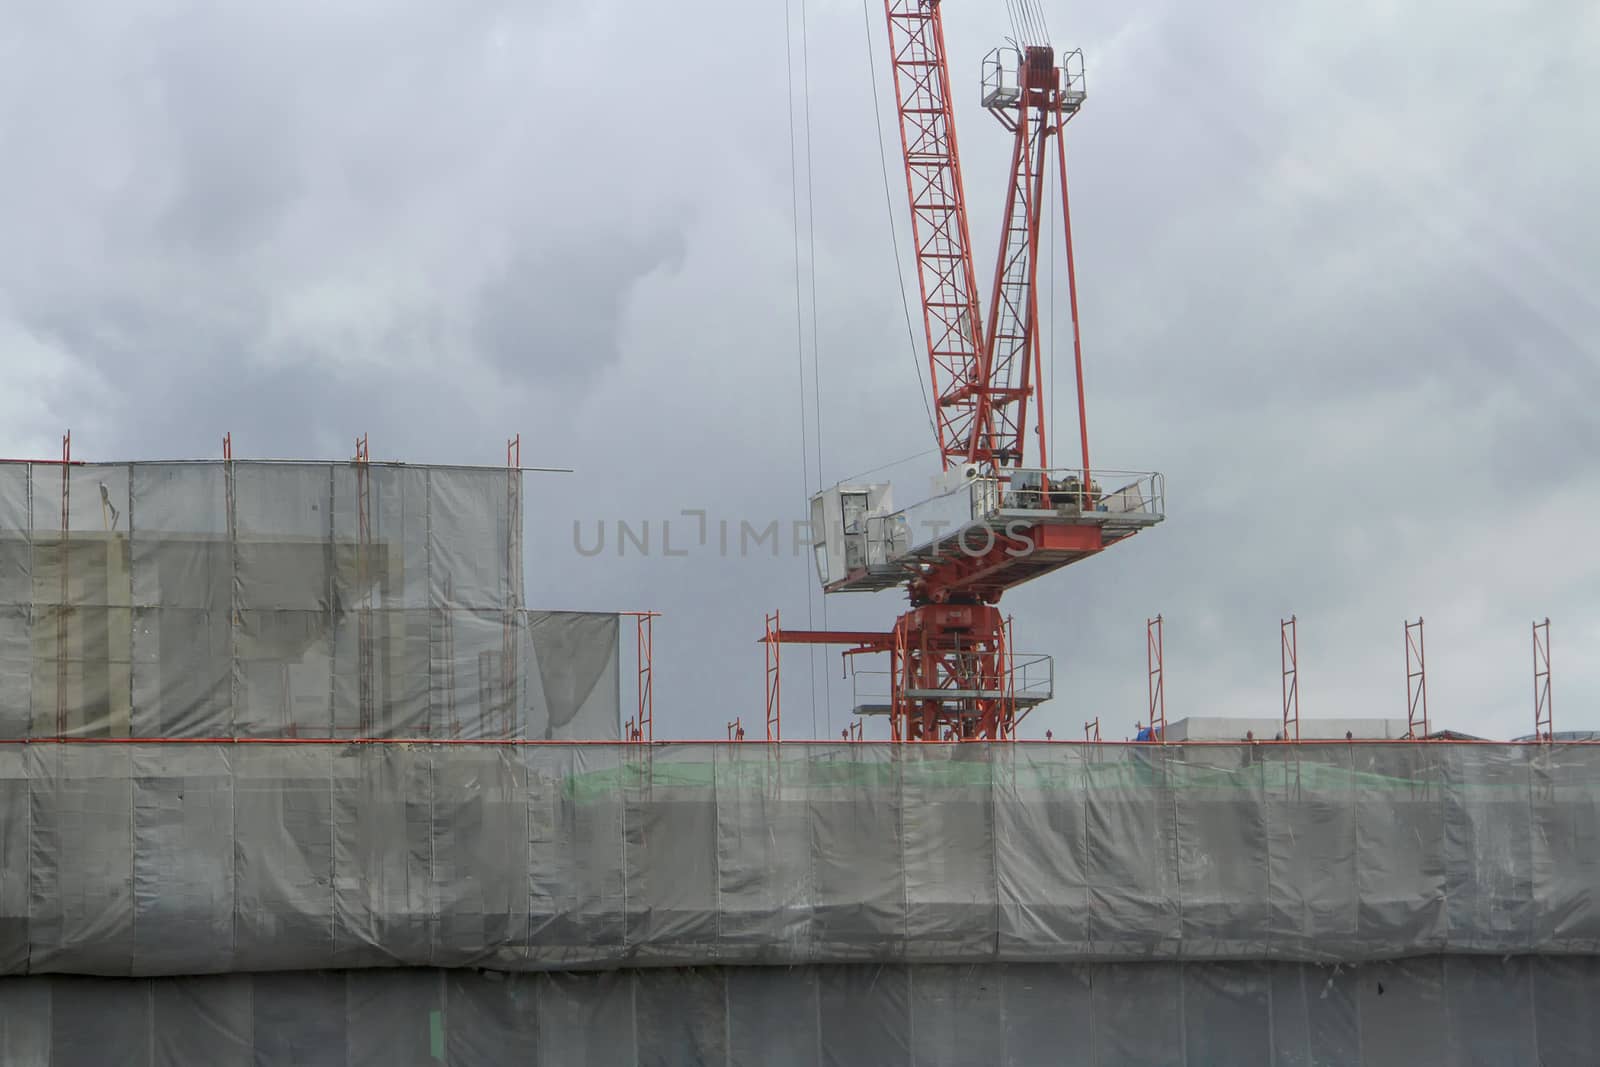 Red crane is under construction.